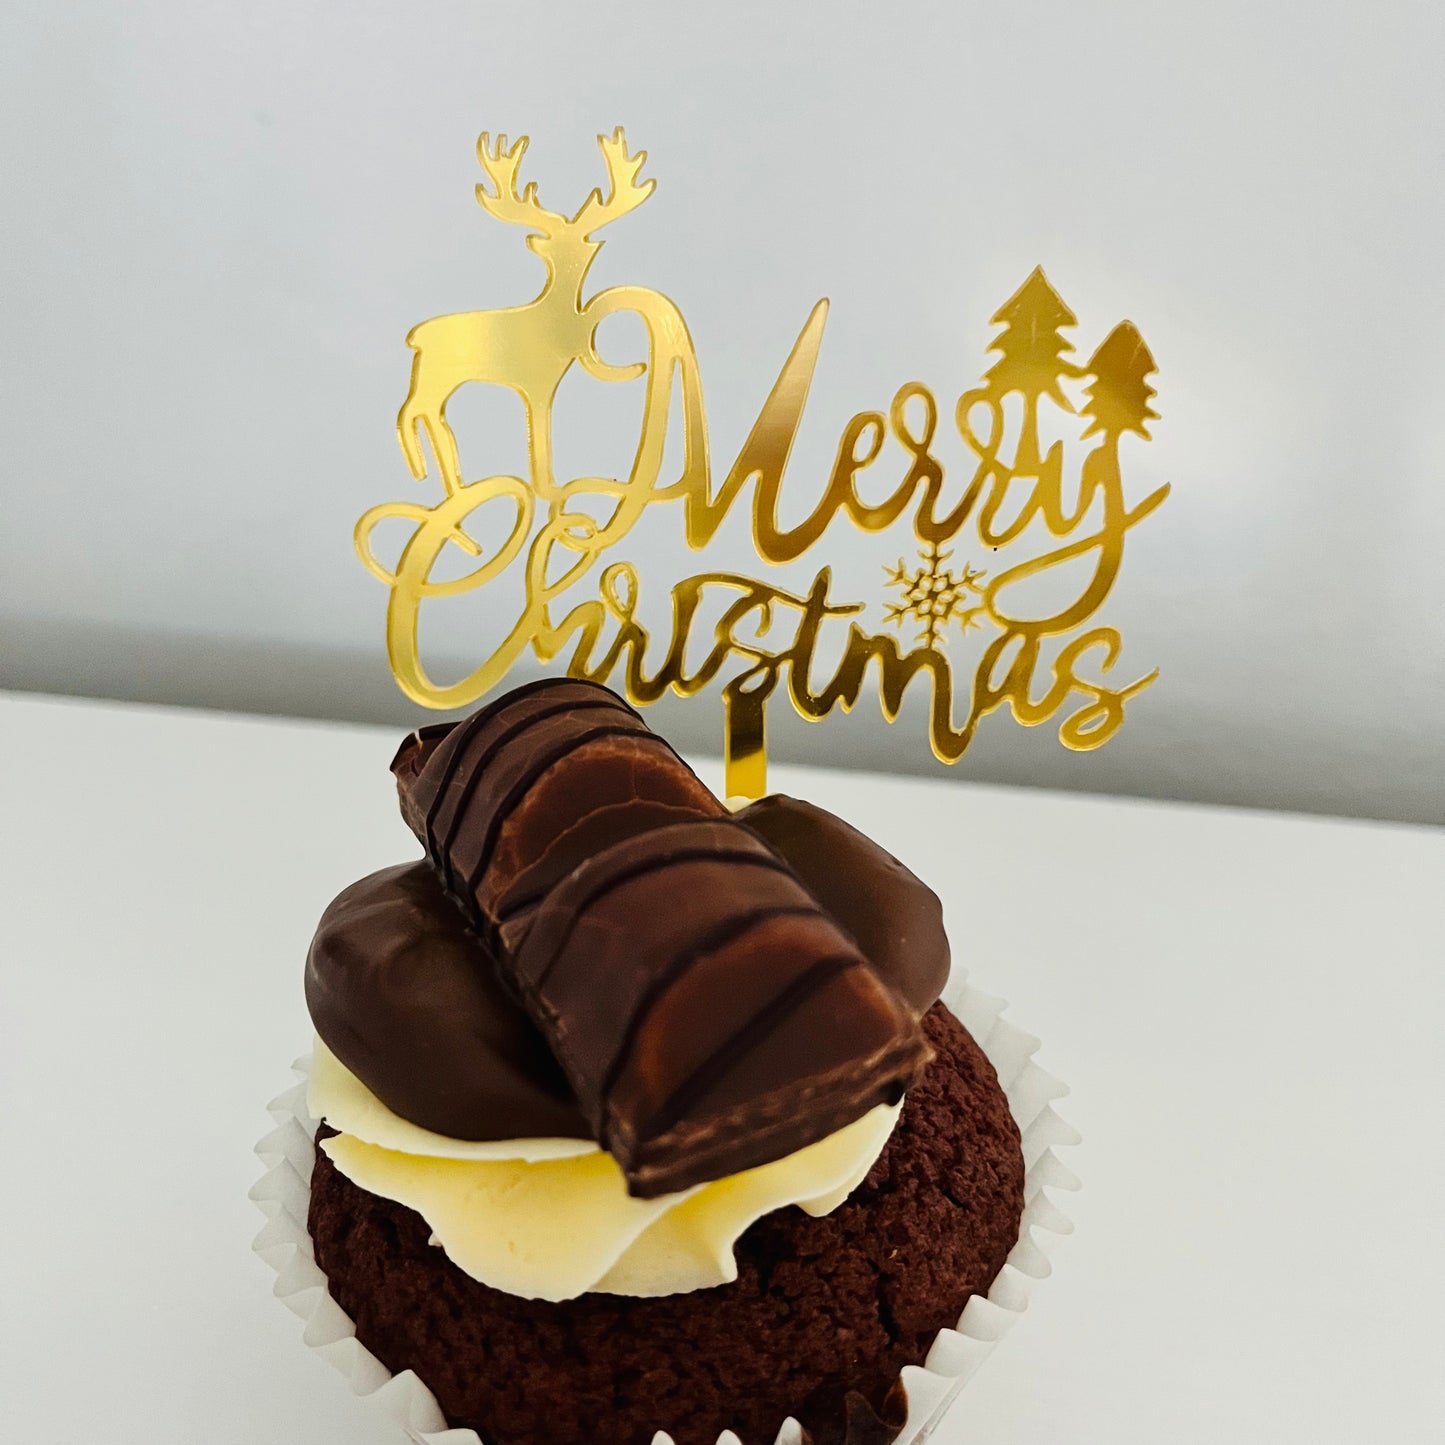 Acrylic Merry Christmas cupcake topper